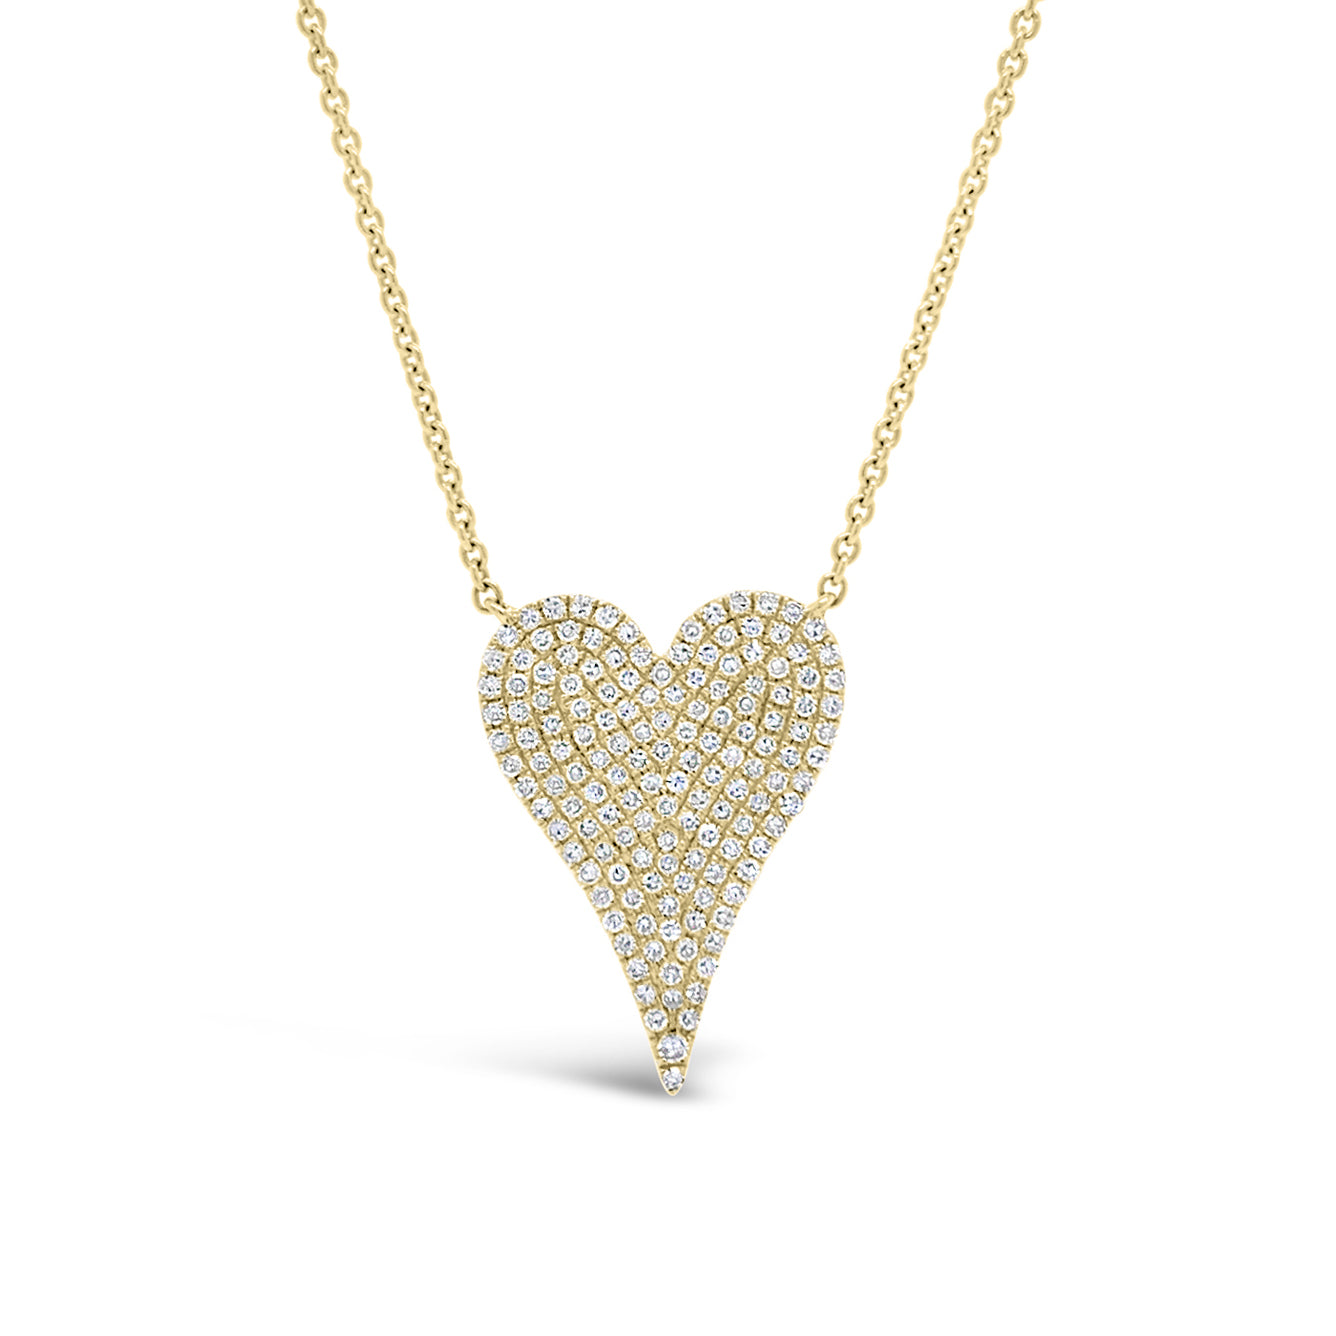 Diamond Medium Elongated Heart Pendant Necklace  -14K yellow gold weighing 3.50 grams  -116 round diamonds totaling 0.44 carats